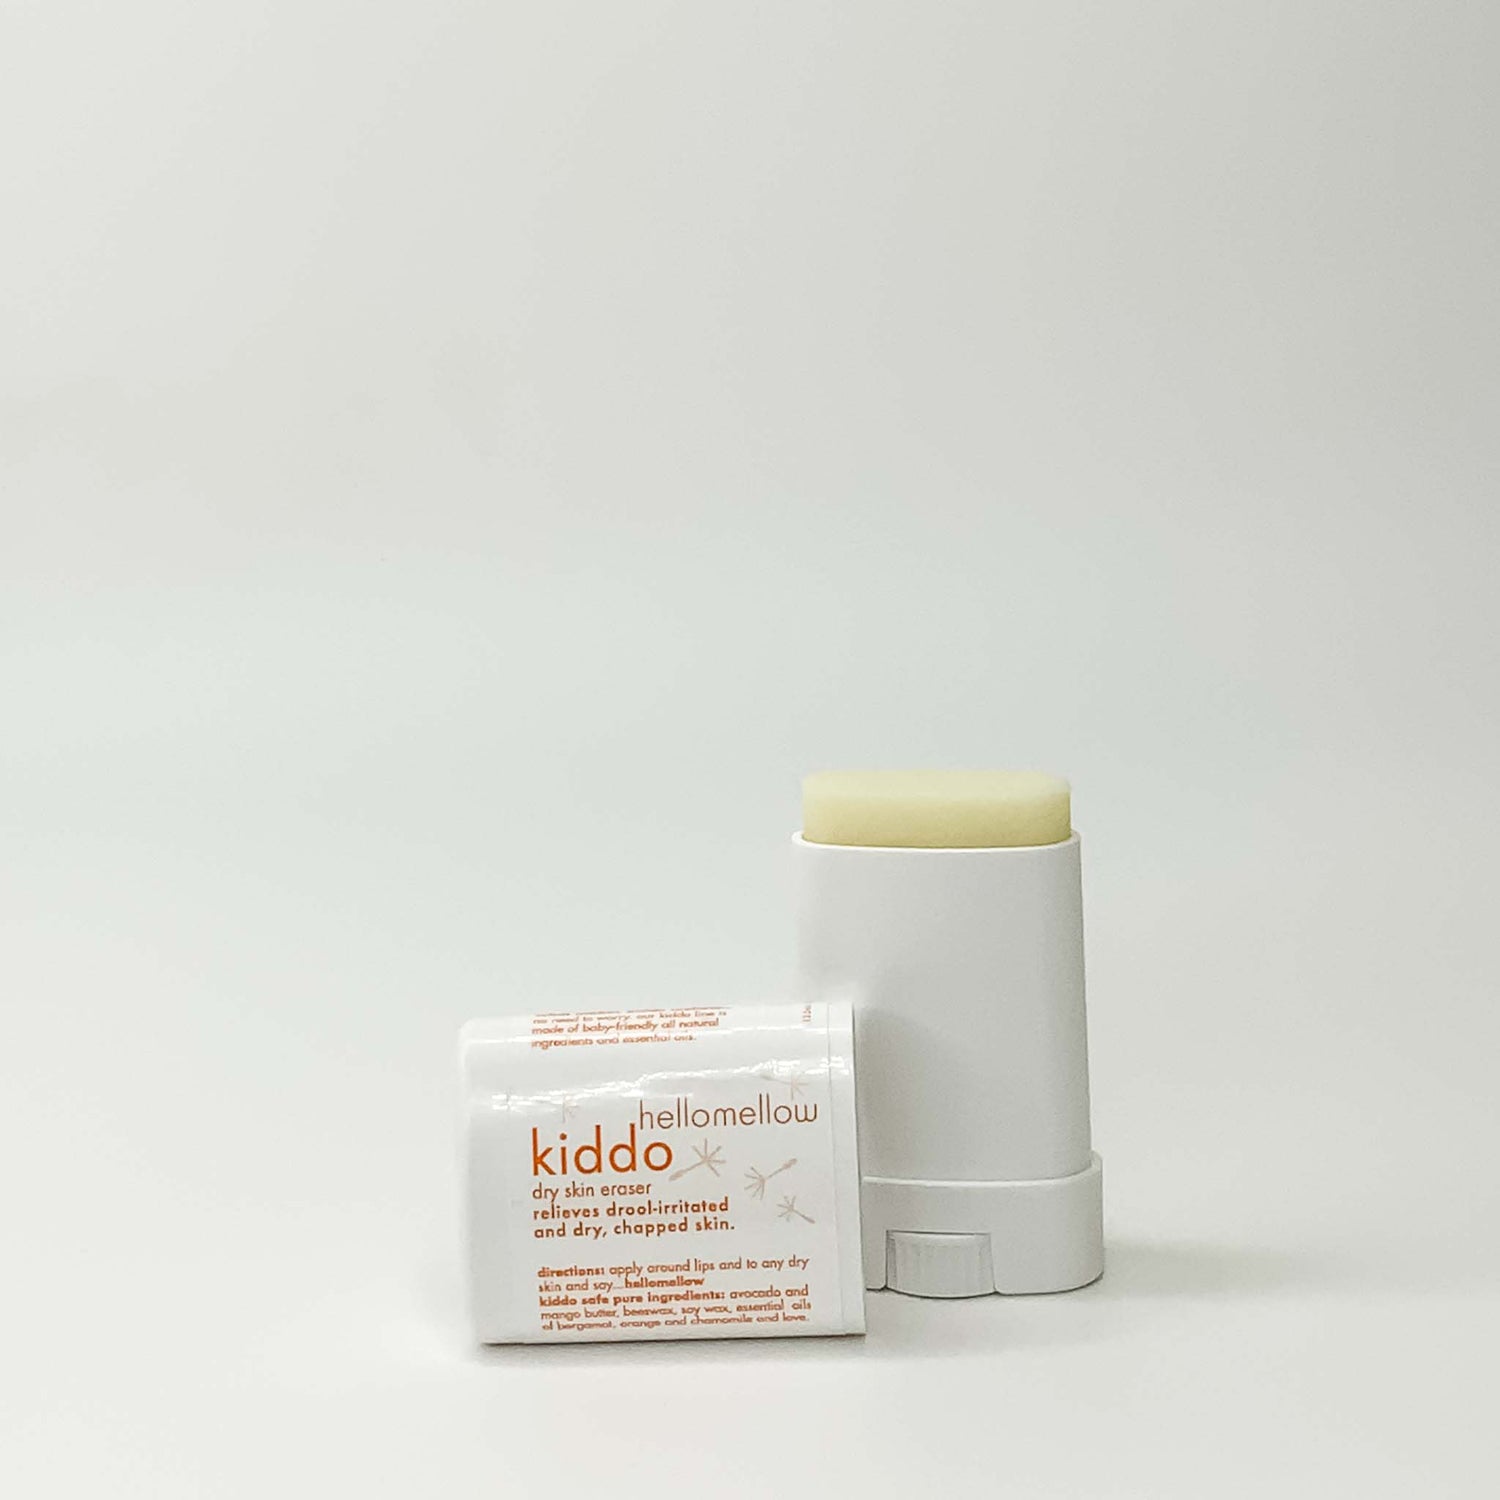 kiddo - dry skin eraser